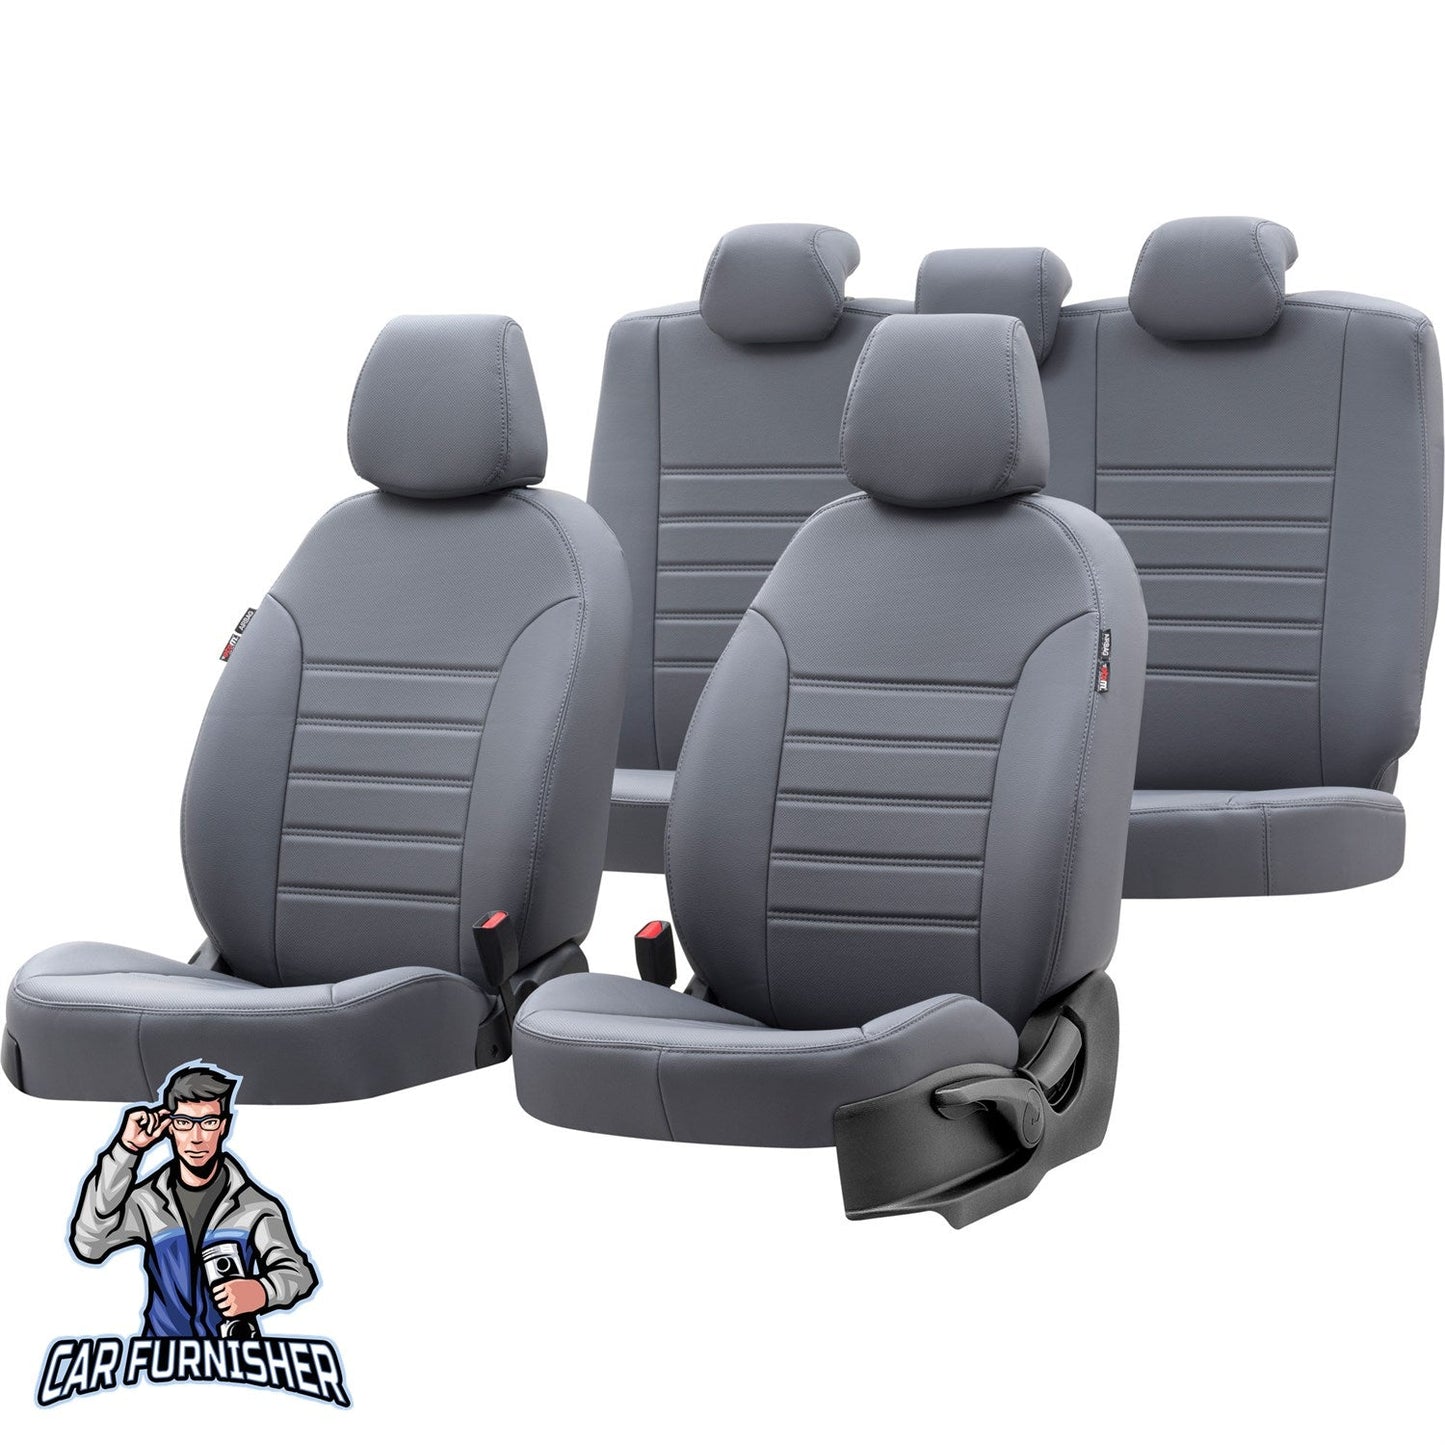 Kia Sportage Seat Covers Istanbul Leather Design Smoked Leather